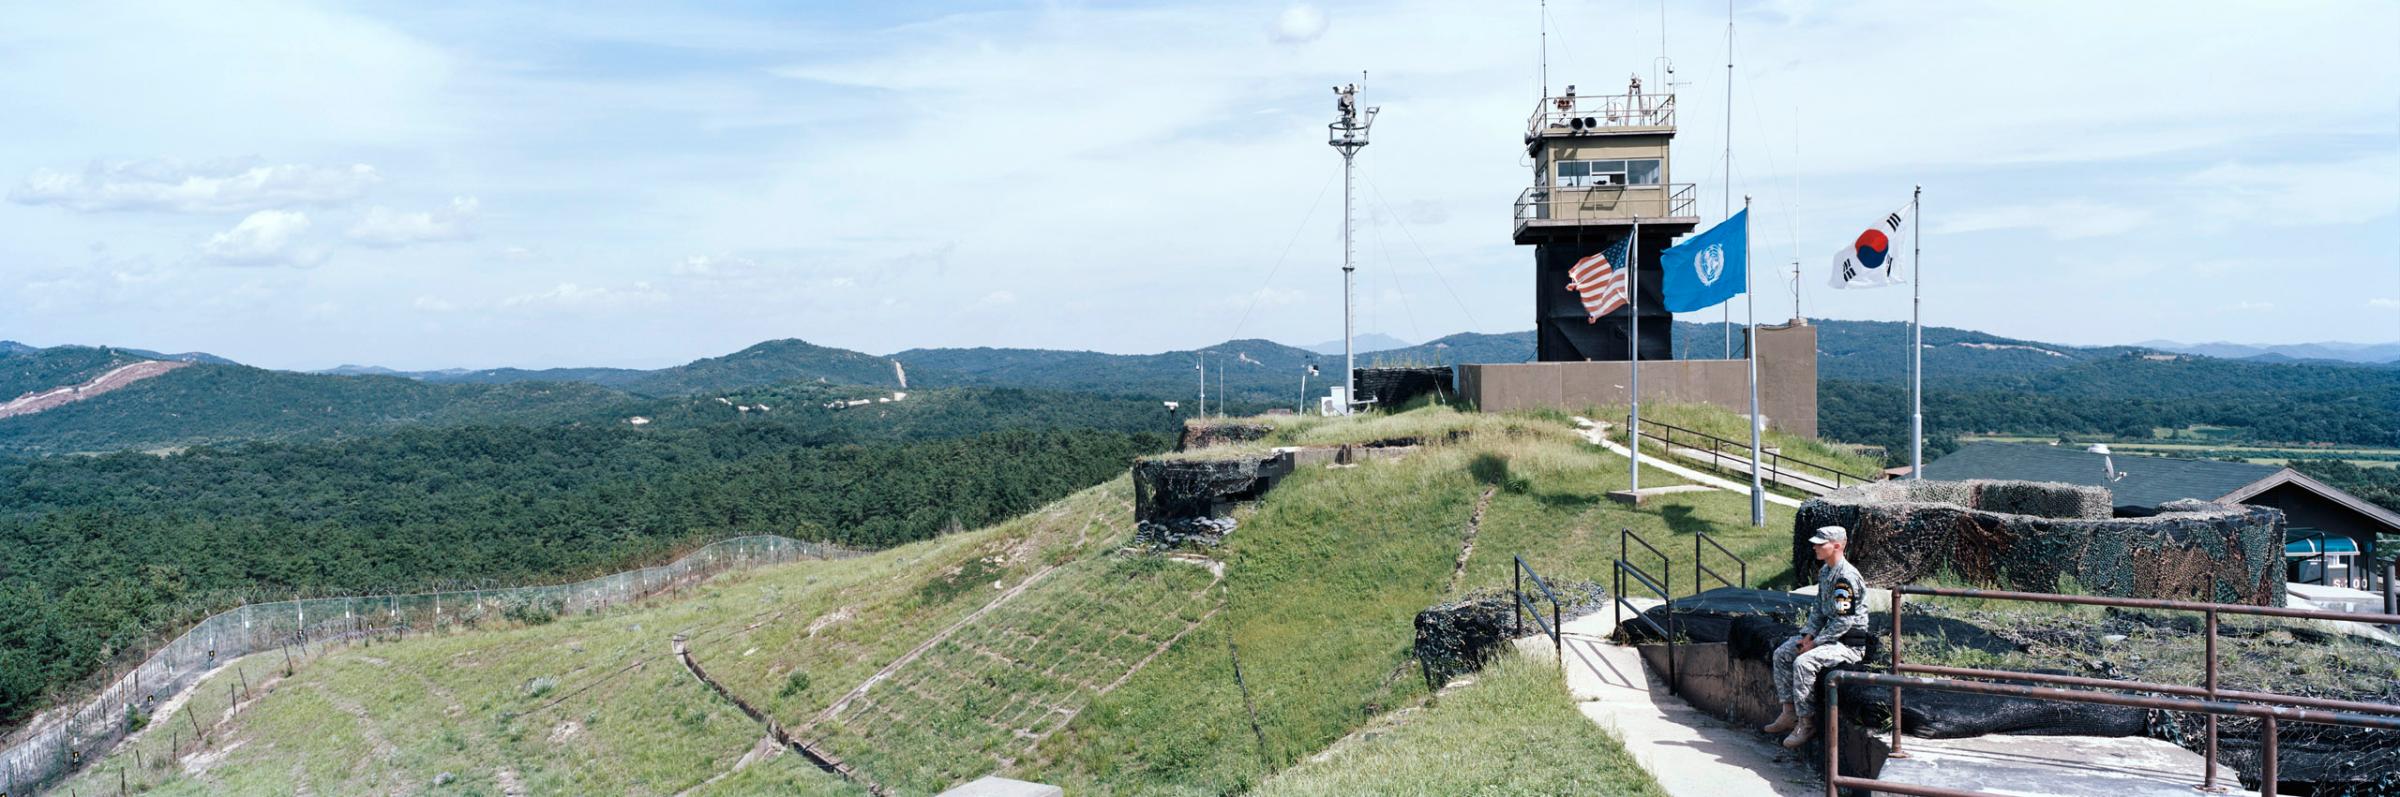 Demilitarized Zone, Panmunjom, Korea, 2009.